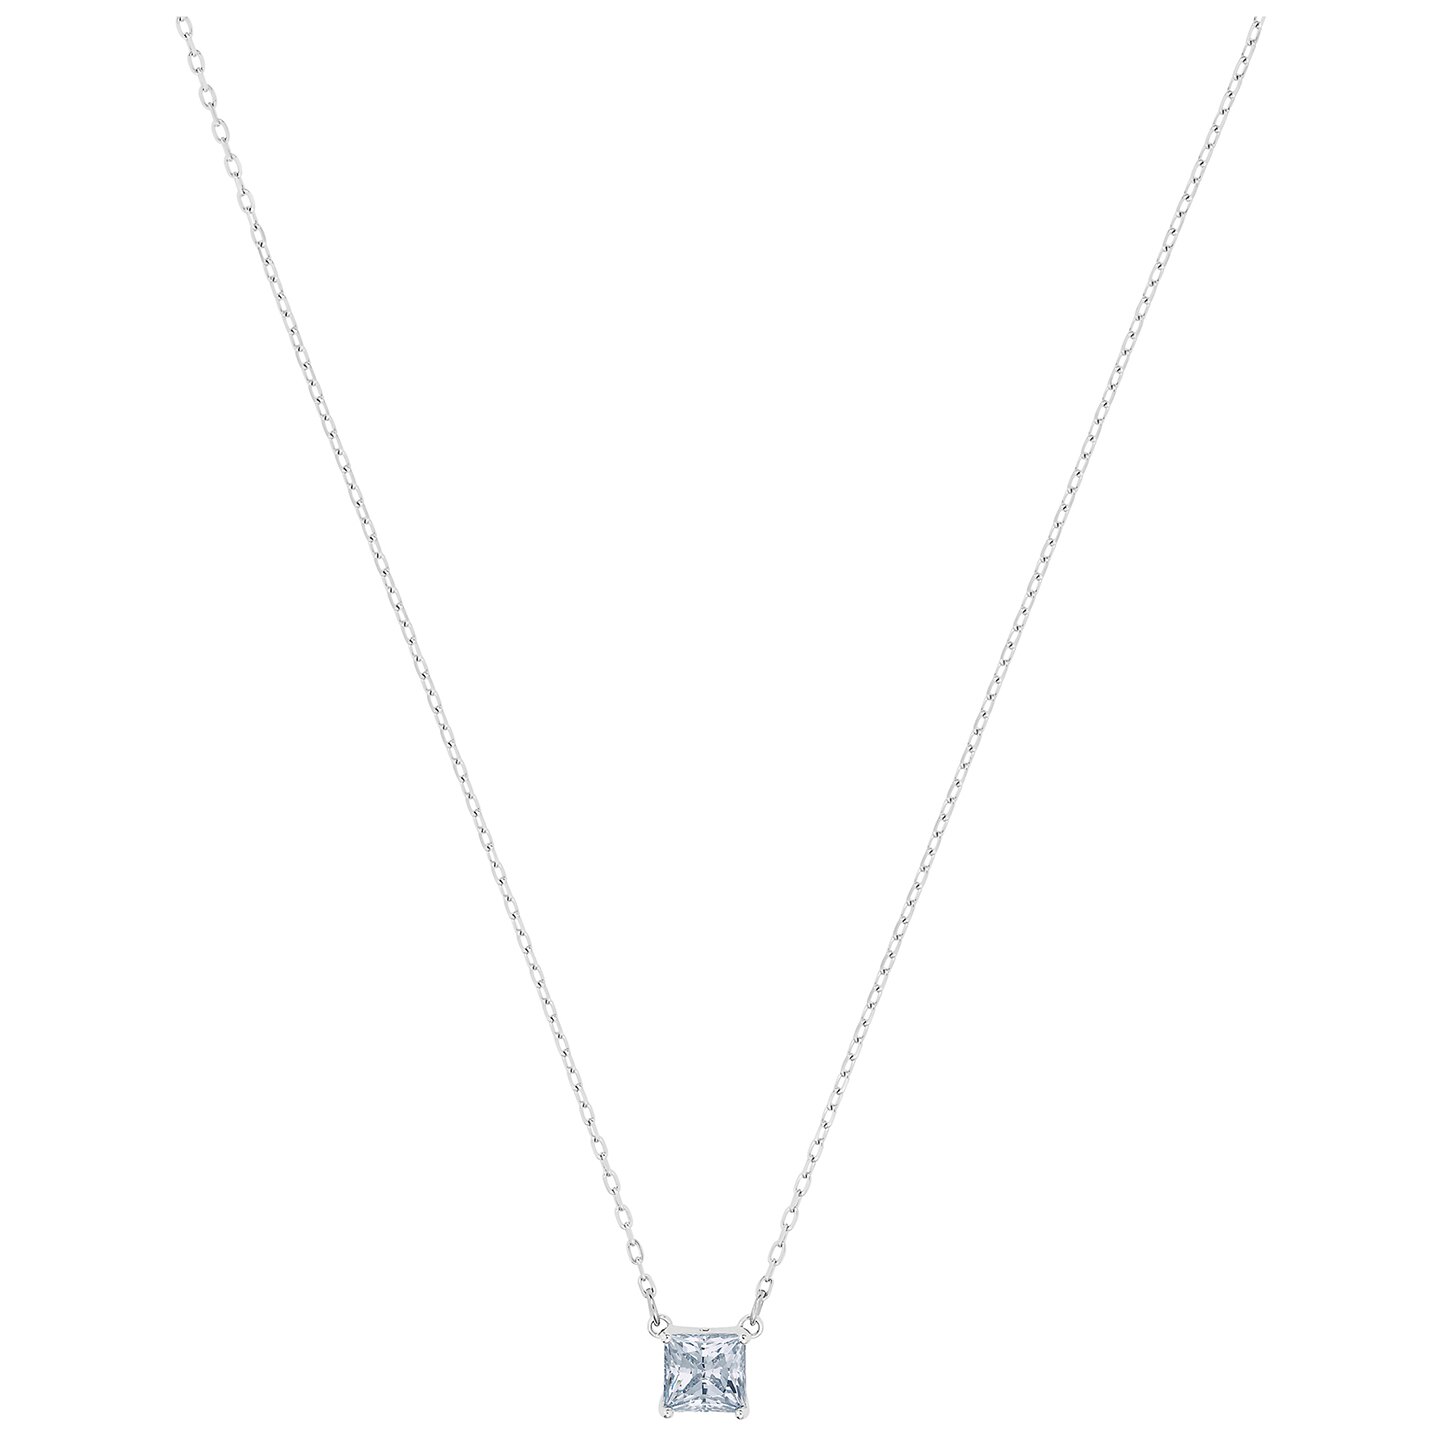 Swarovski Attract Necklace - White - Rhodium Plated - 5510696 | eBay